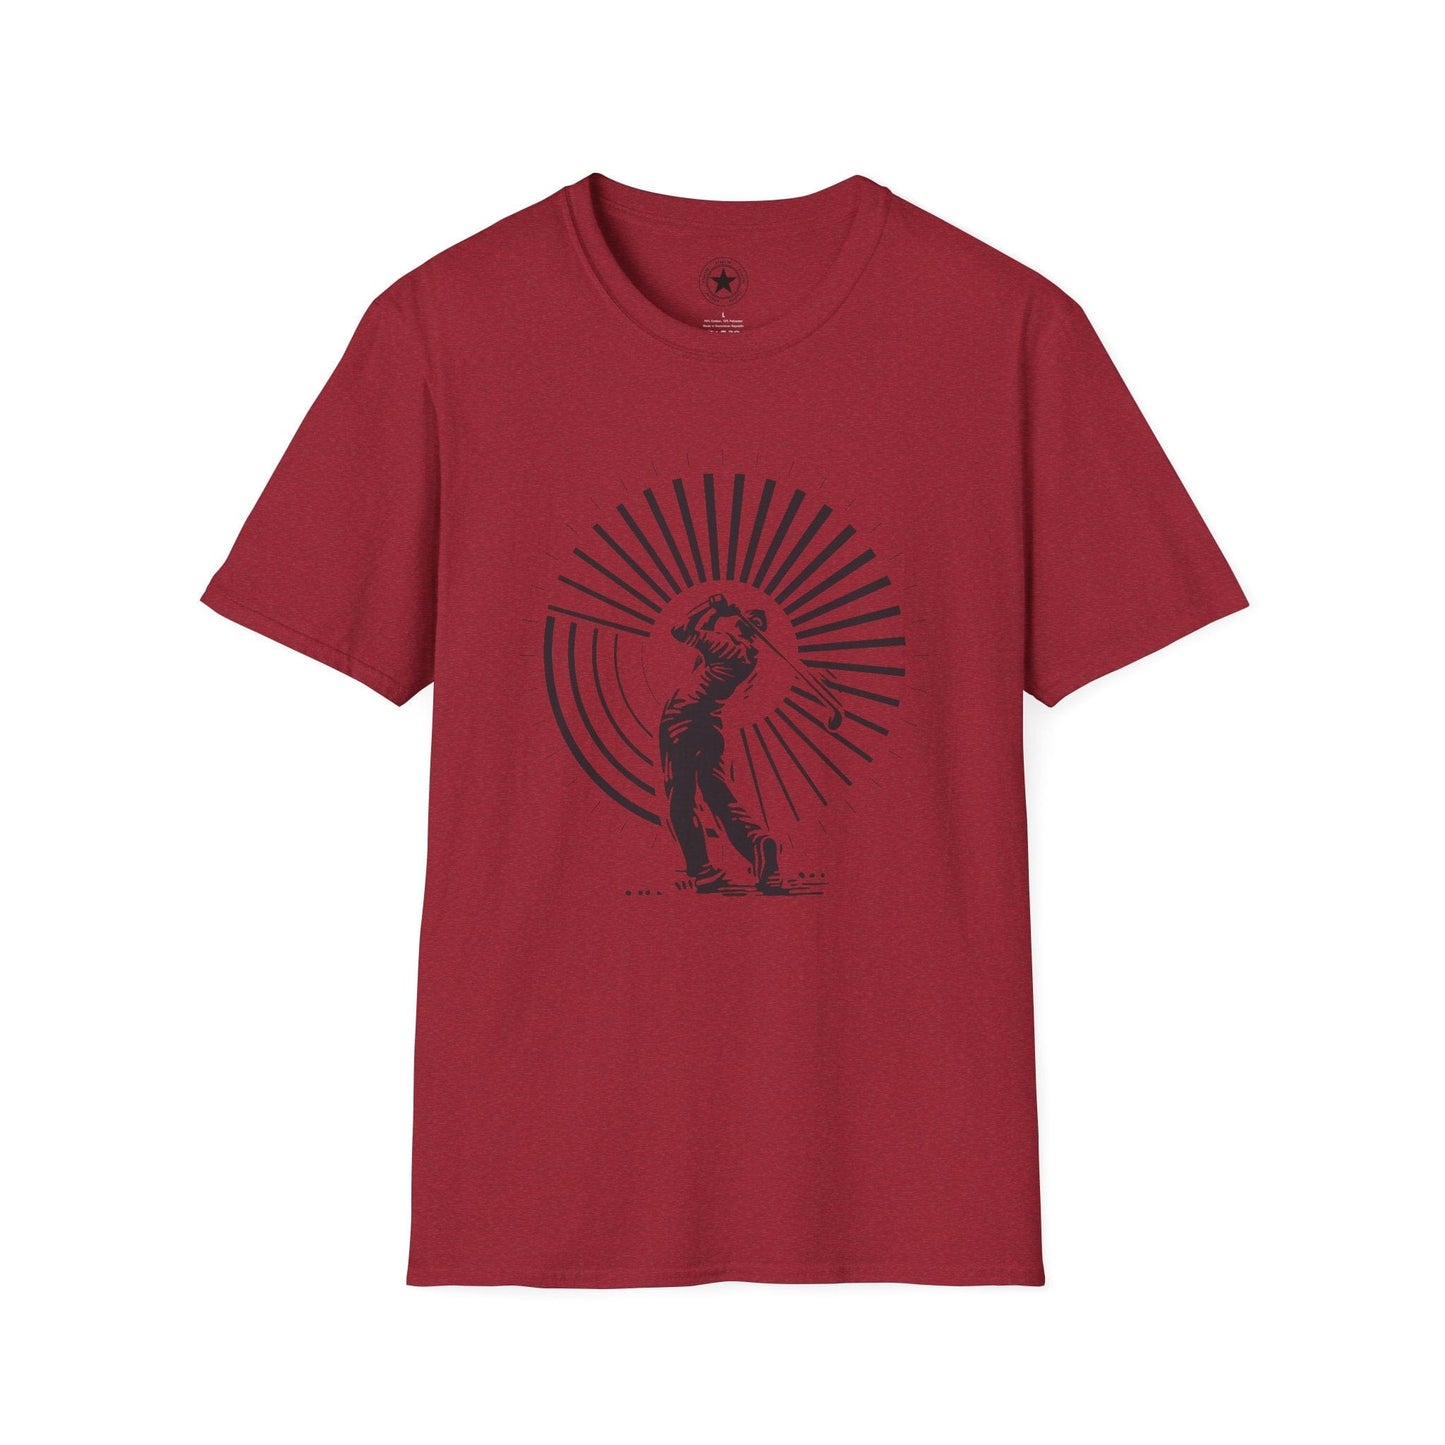 TeeFEVA T-Shirt Golf Swing Zone : Great Golf Lover T-Shirt, Unisex Soft & Comfortable